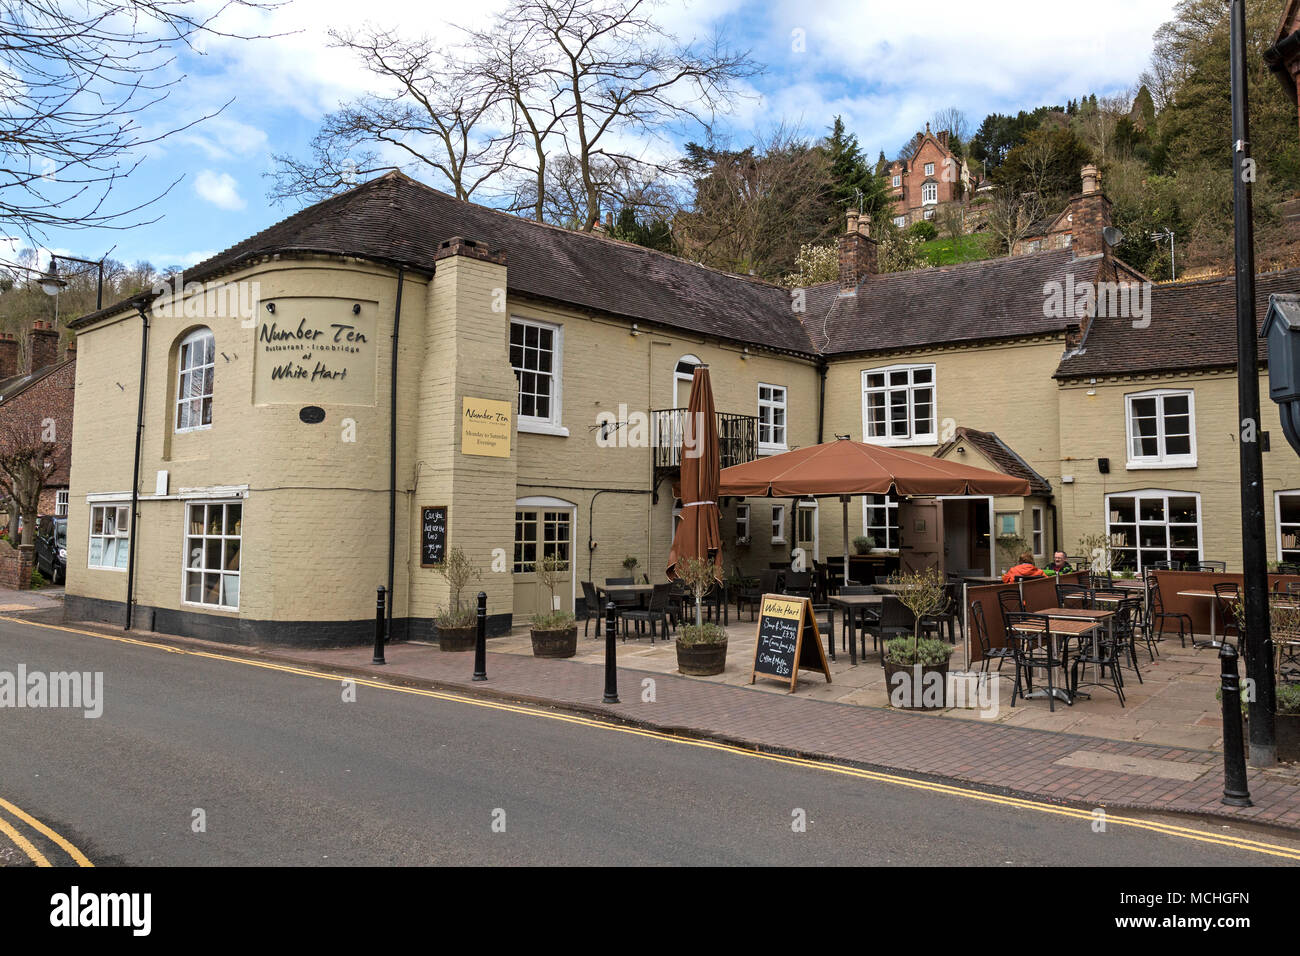 The White Hart pub in Ironbridge, Shropshire, England. An 18th century inn on the Wharfage, or Main Street in the town. Stock Photo